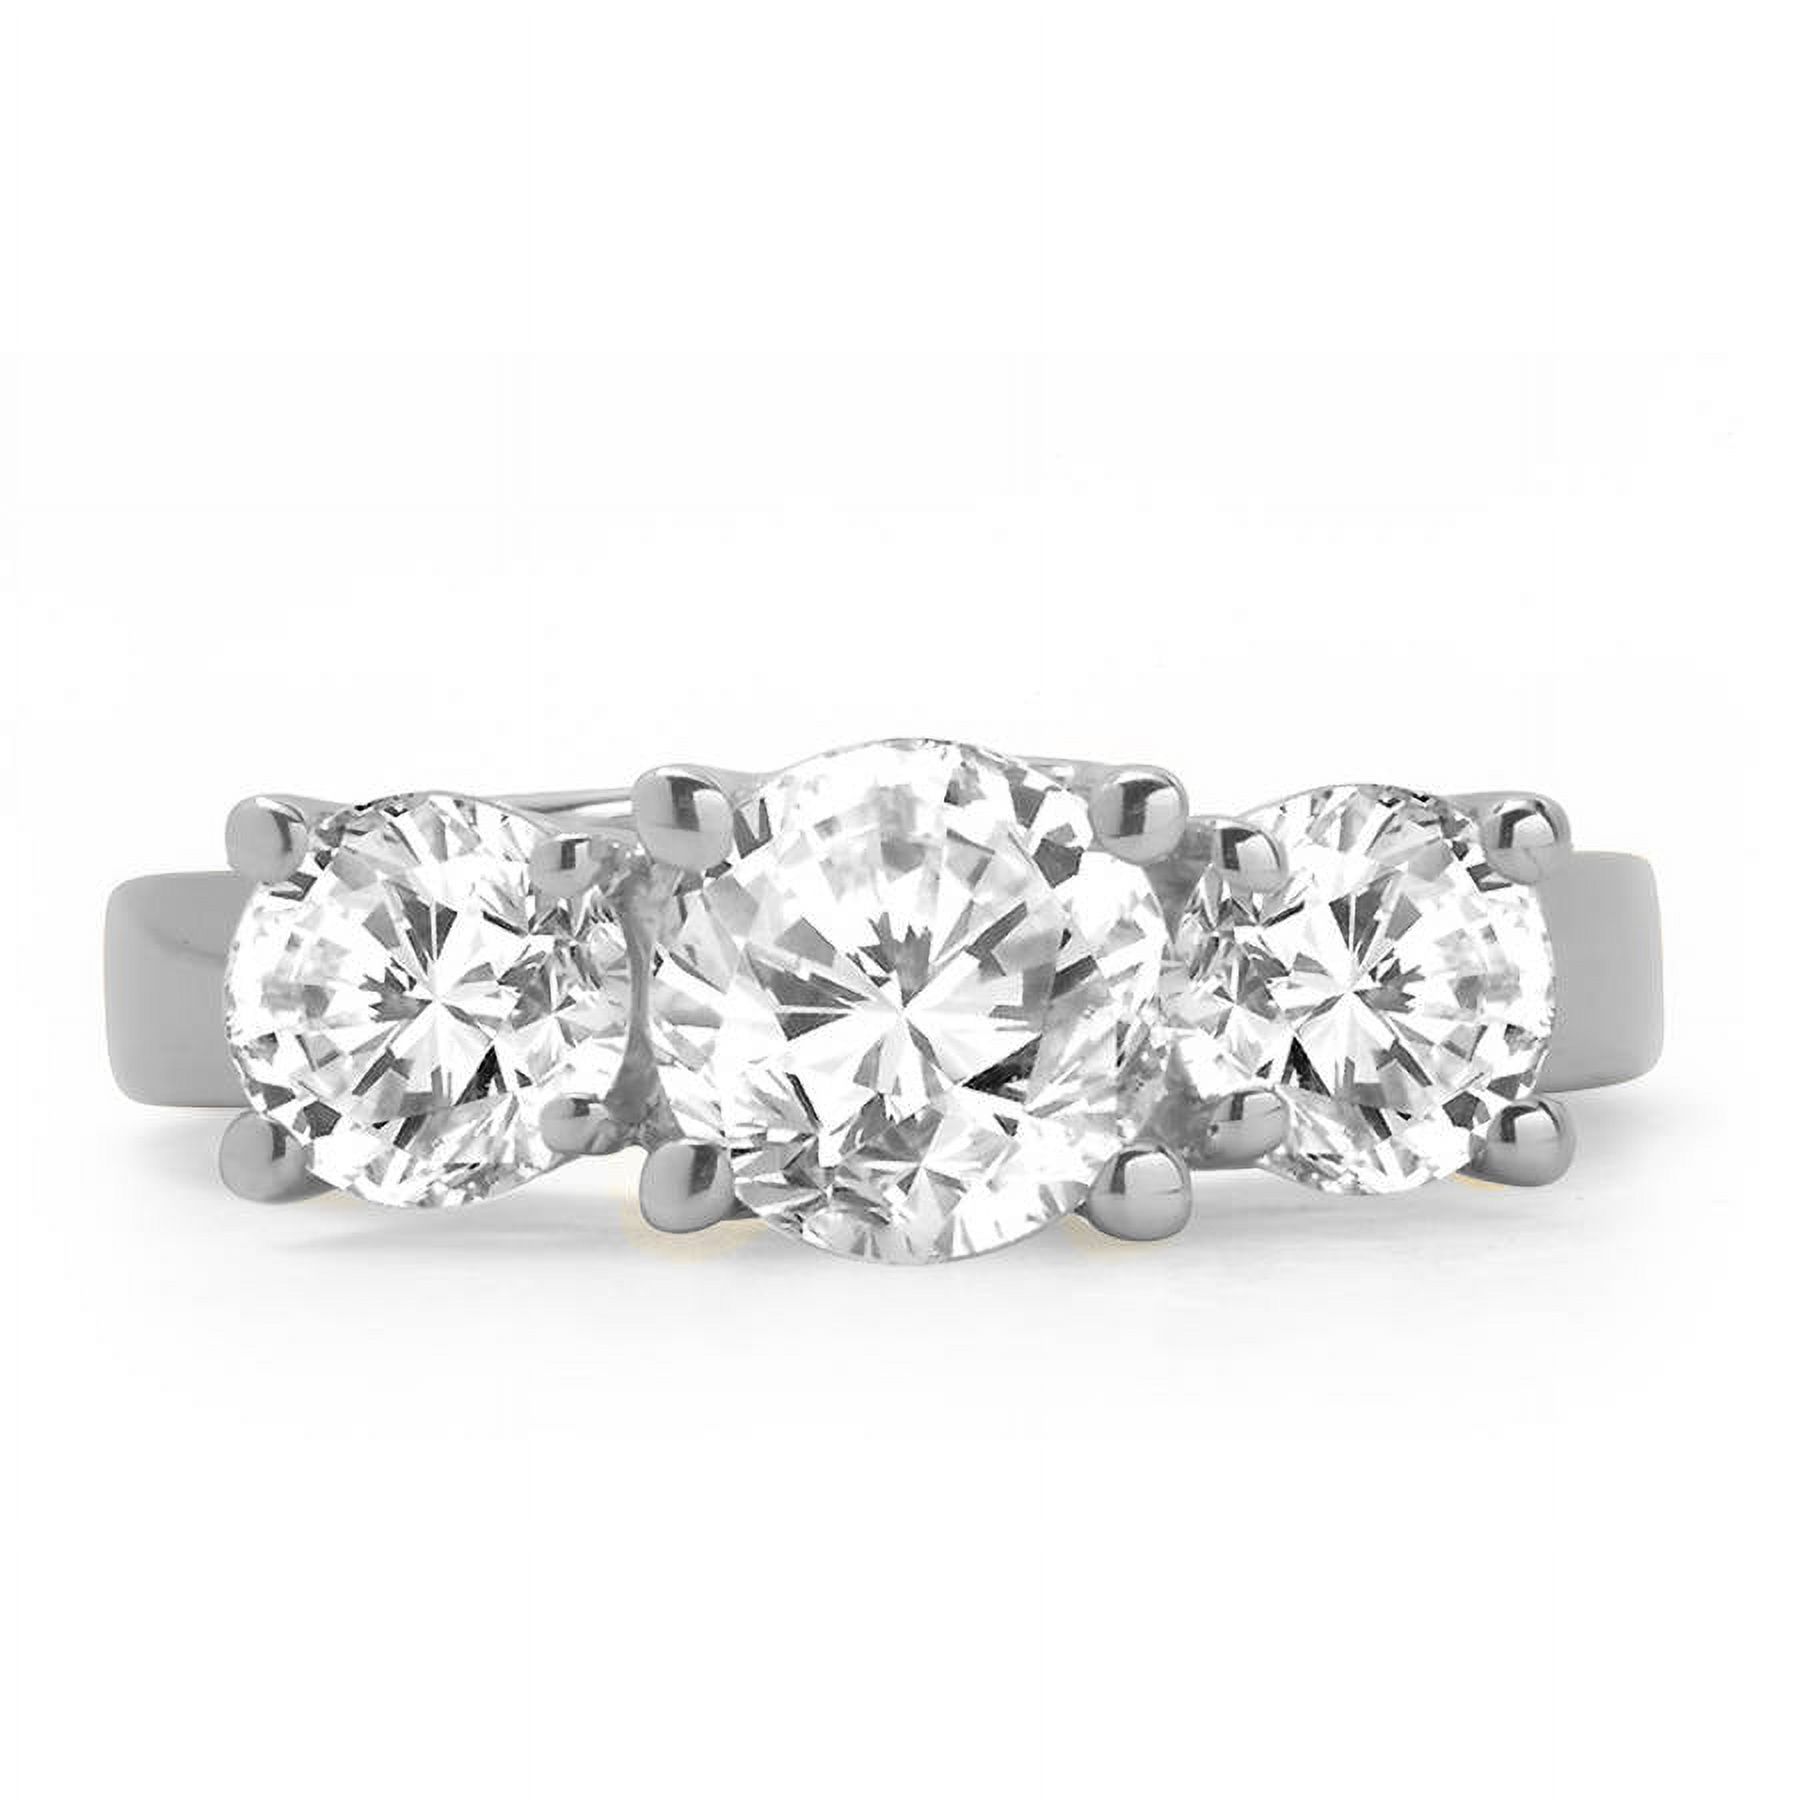 Arista 2 ct Round Cut White Diamond 3-Stone Ring 14K White Gold (H-I, I2-I3) - image 1 of 6